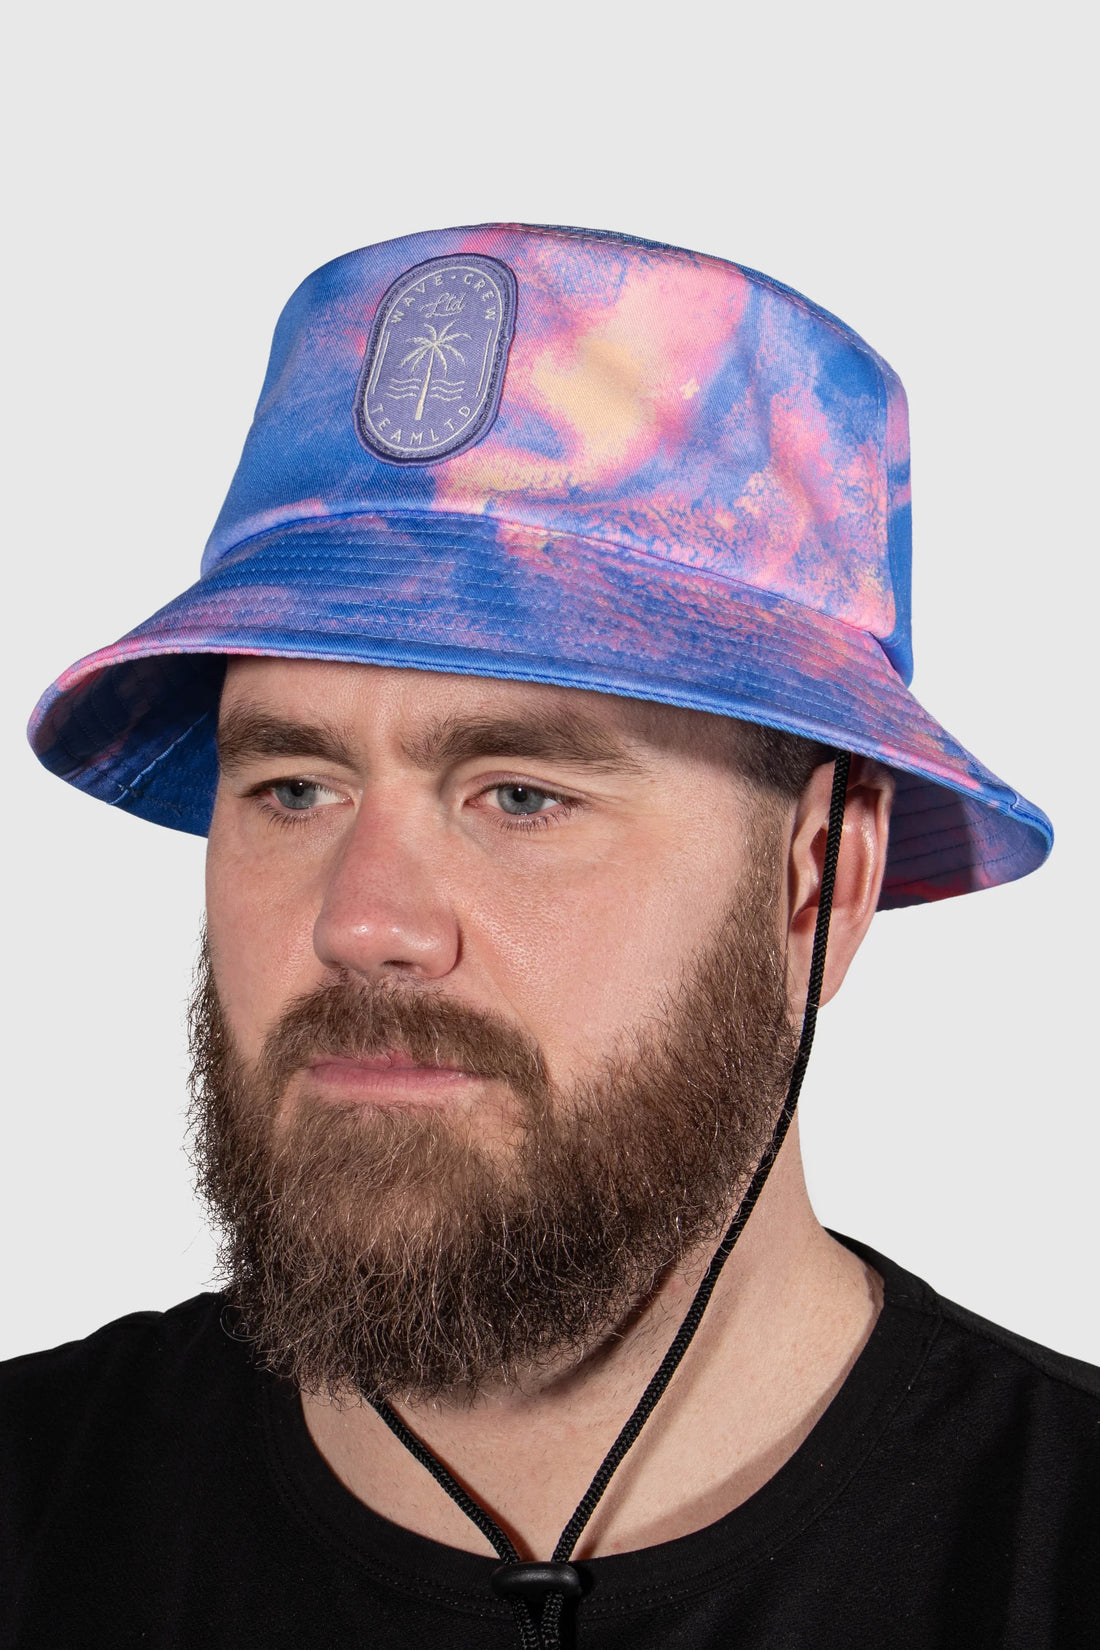 Huk Men's Aqua Dye Performance Bucket Hat - Moss - 1